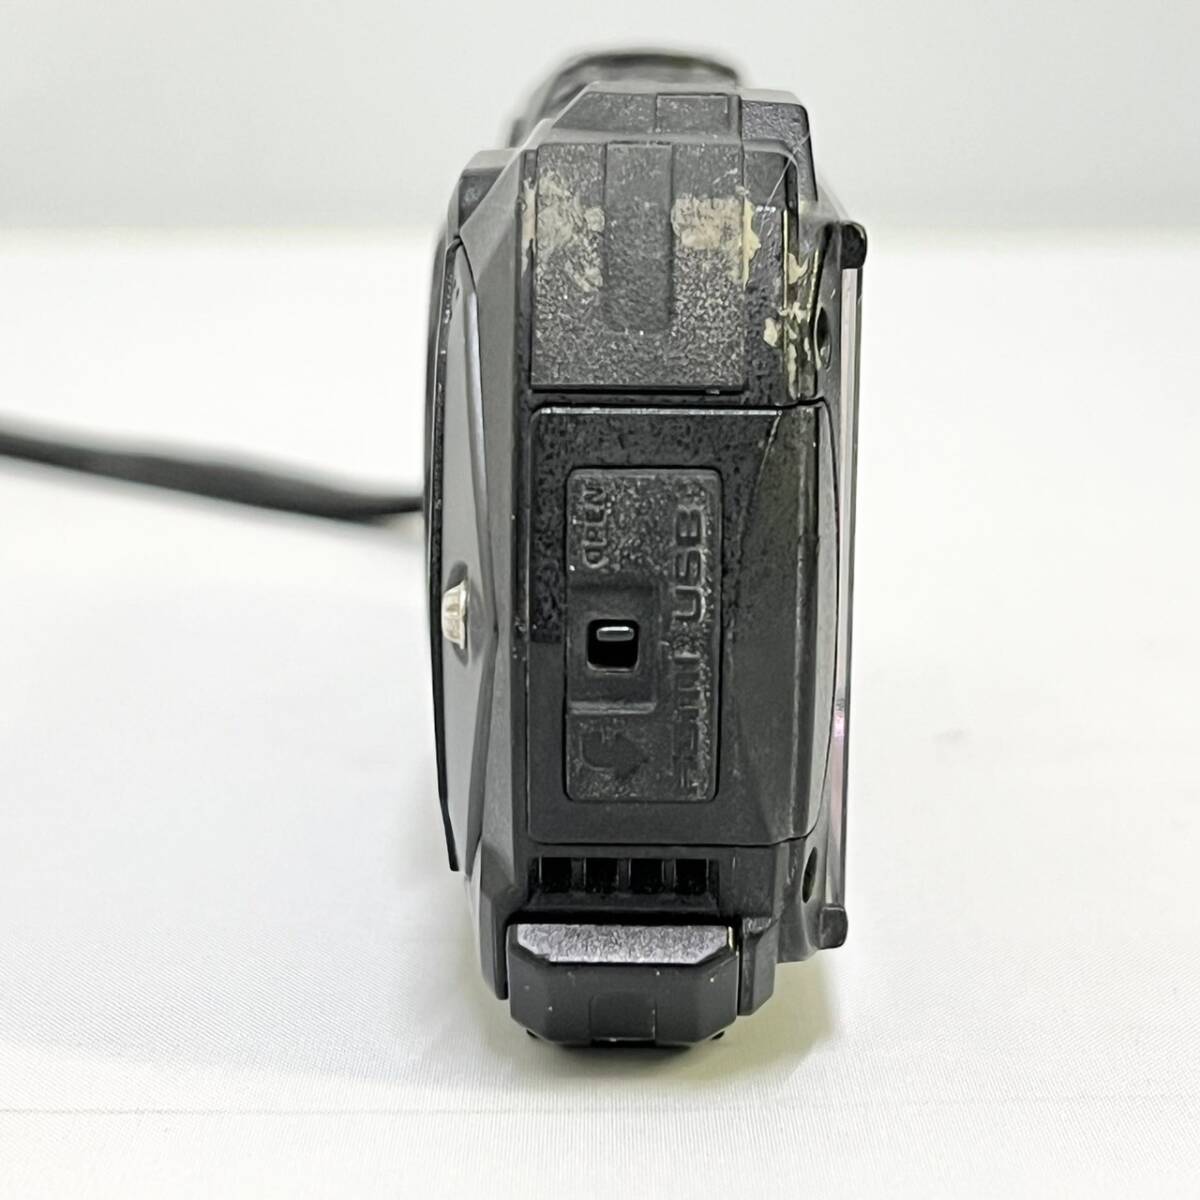 BEg090I 60 RICOH WG-60 リコー デジタルカメラ ブラック 防水カメラ 14m防水 耐衝撃 防塵 耐寒 1600万画素 マーメードモード搭載_画像3